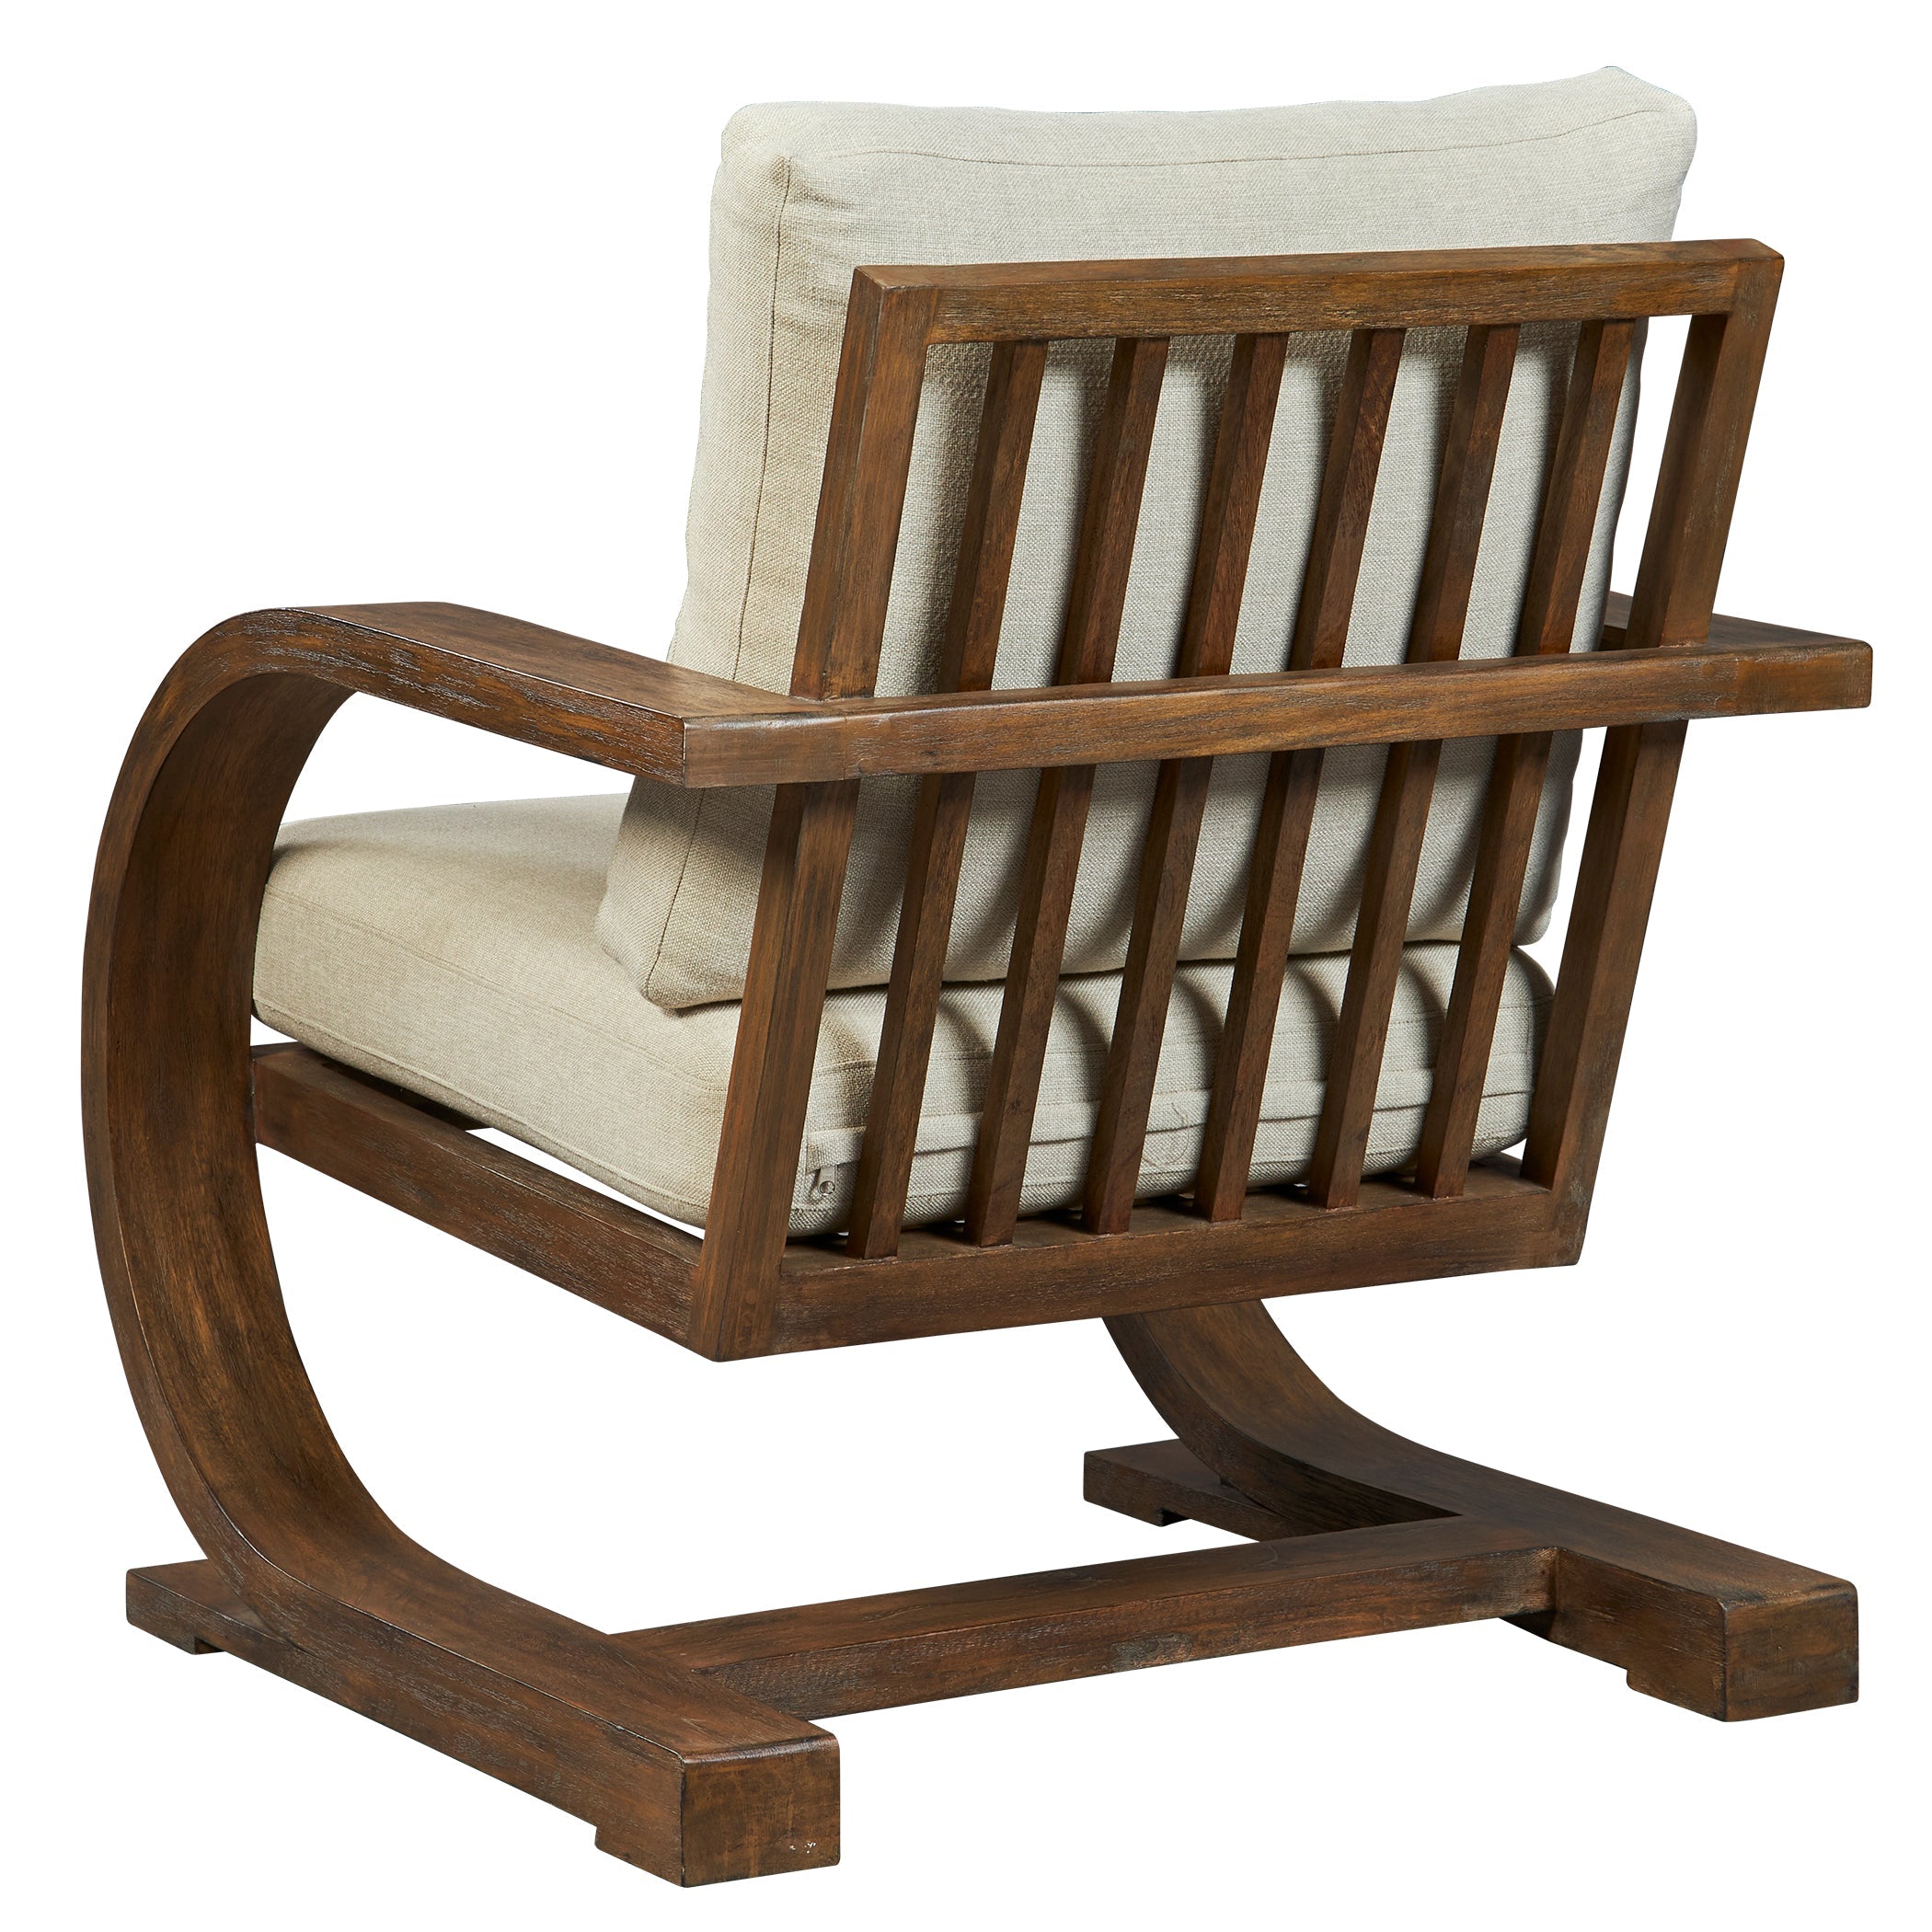 Uttermost Bedrich Wooden Accent Chair